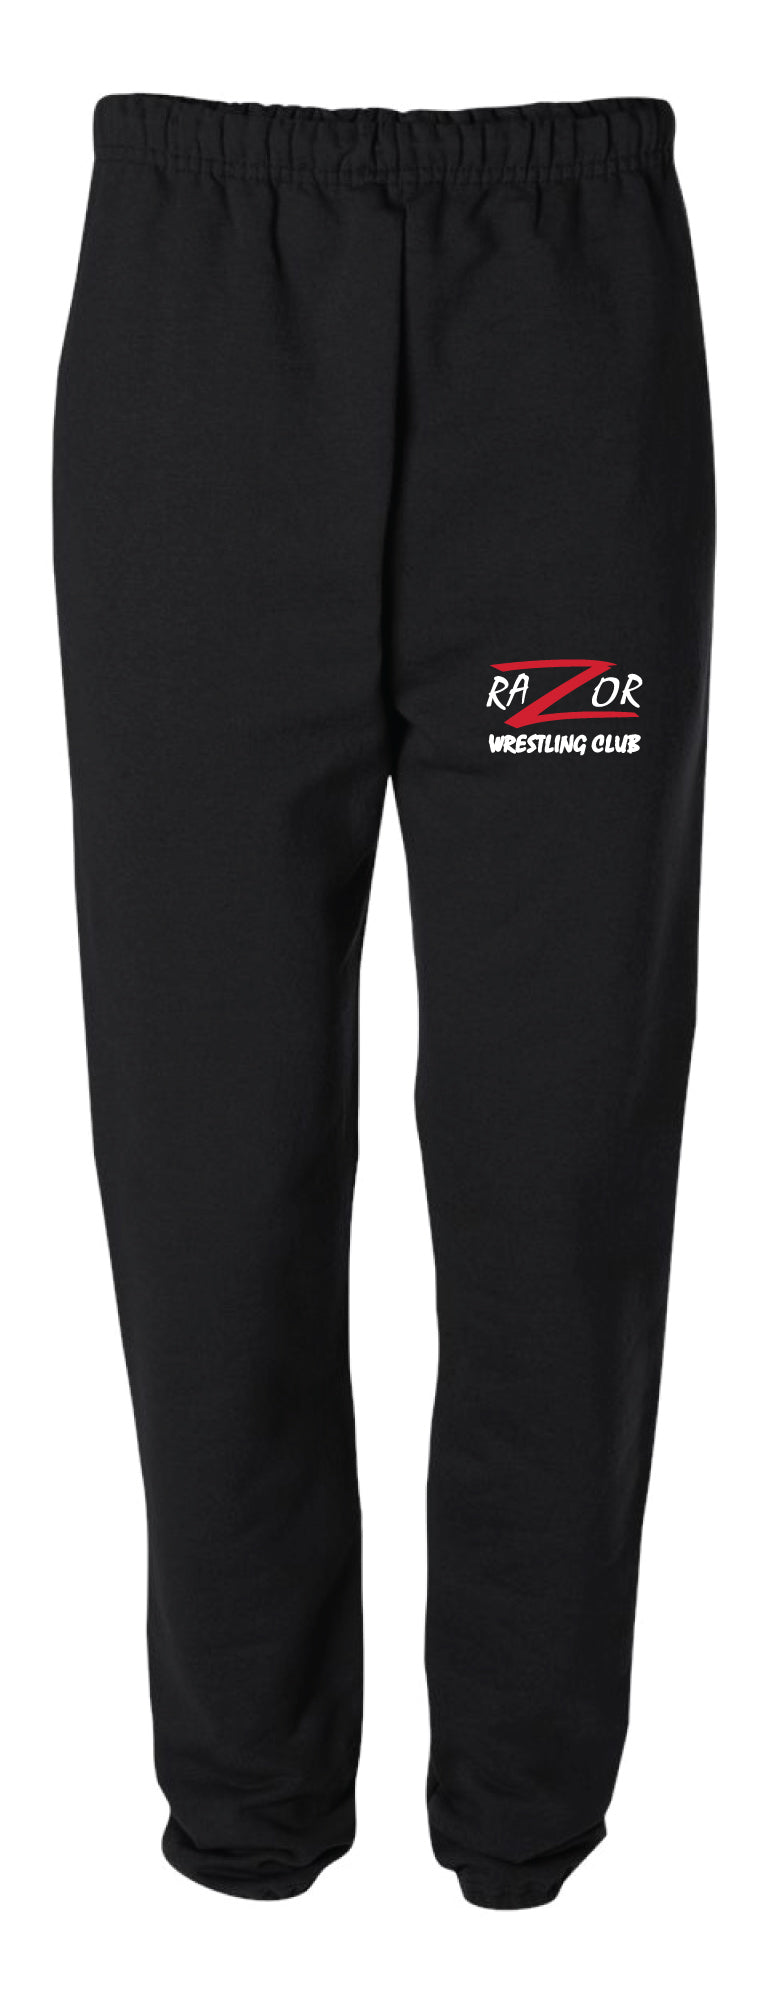 Razor Wrestling Club Cotton Sweatpants - Black - 5KounT2018